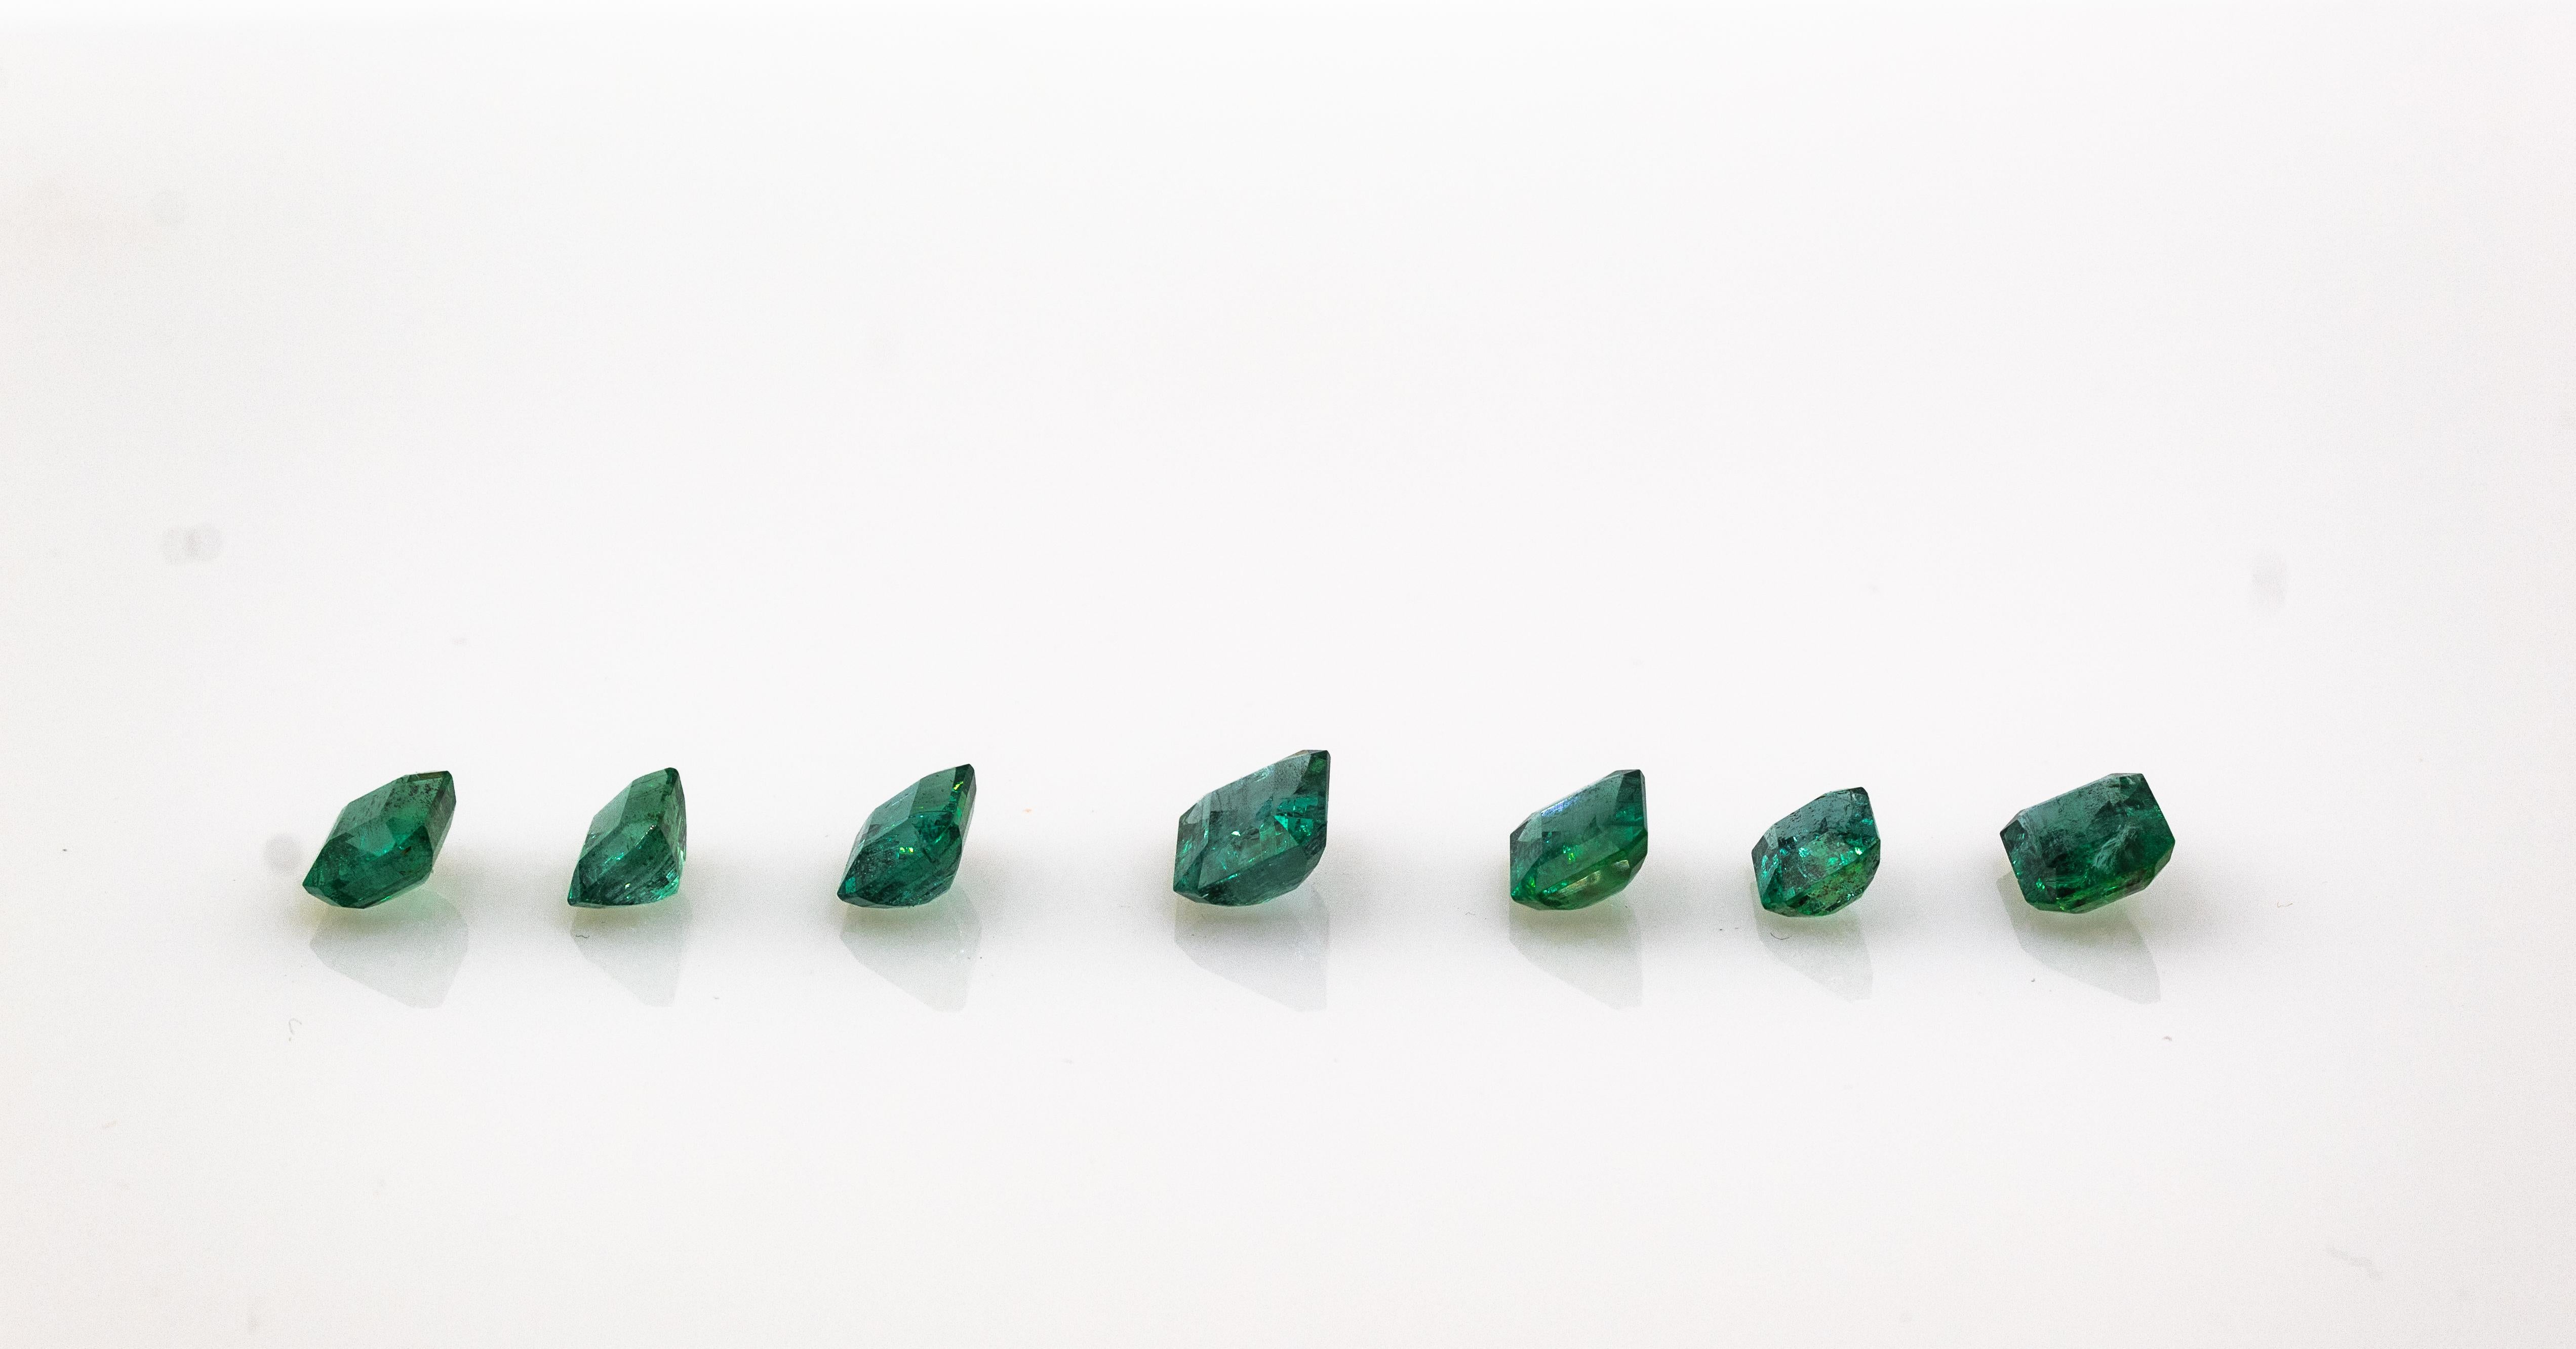 Certifiable Zambia Octagon Cut 2.98 Carat Emerald Loose Gemstone 4